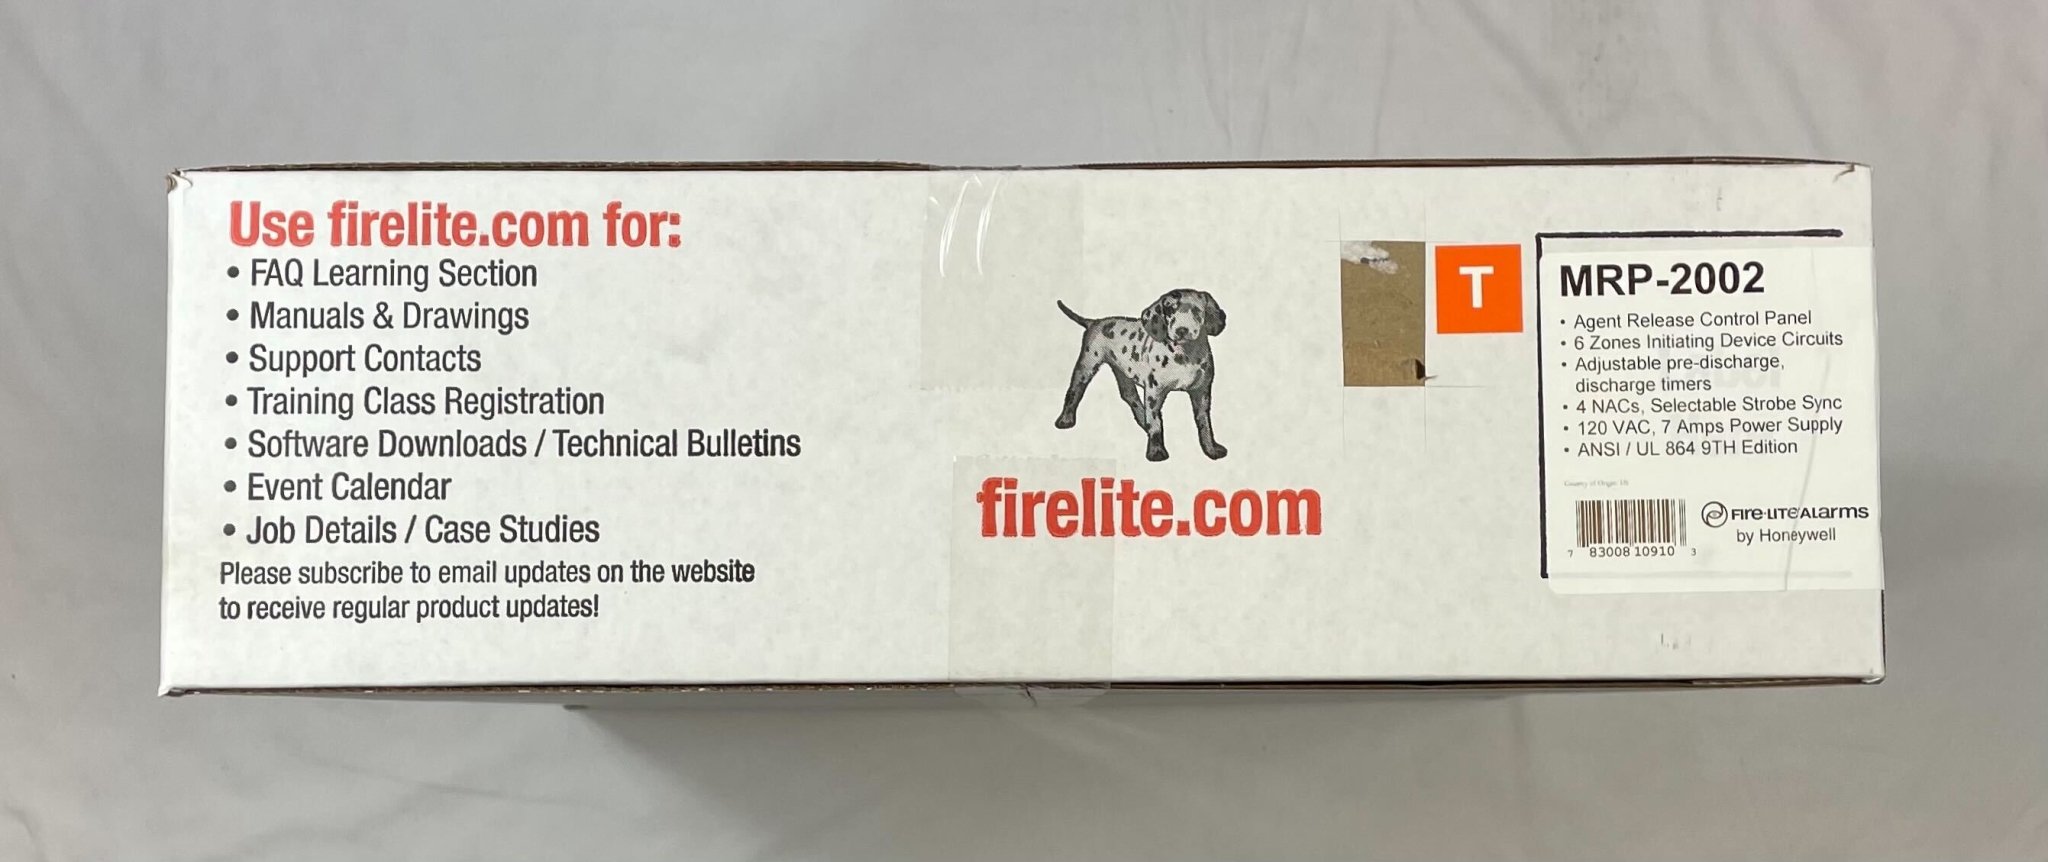 Firelite MRP-2002 - The Fire Alarm Supplier